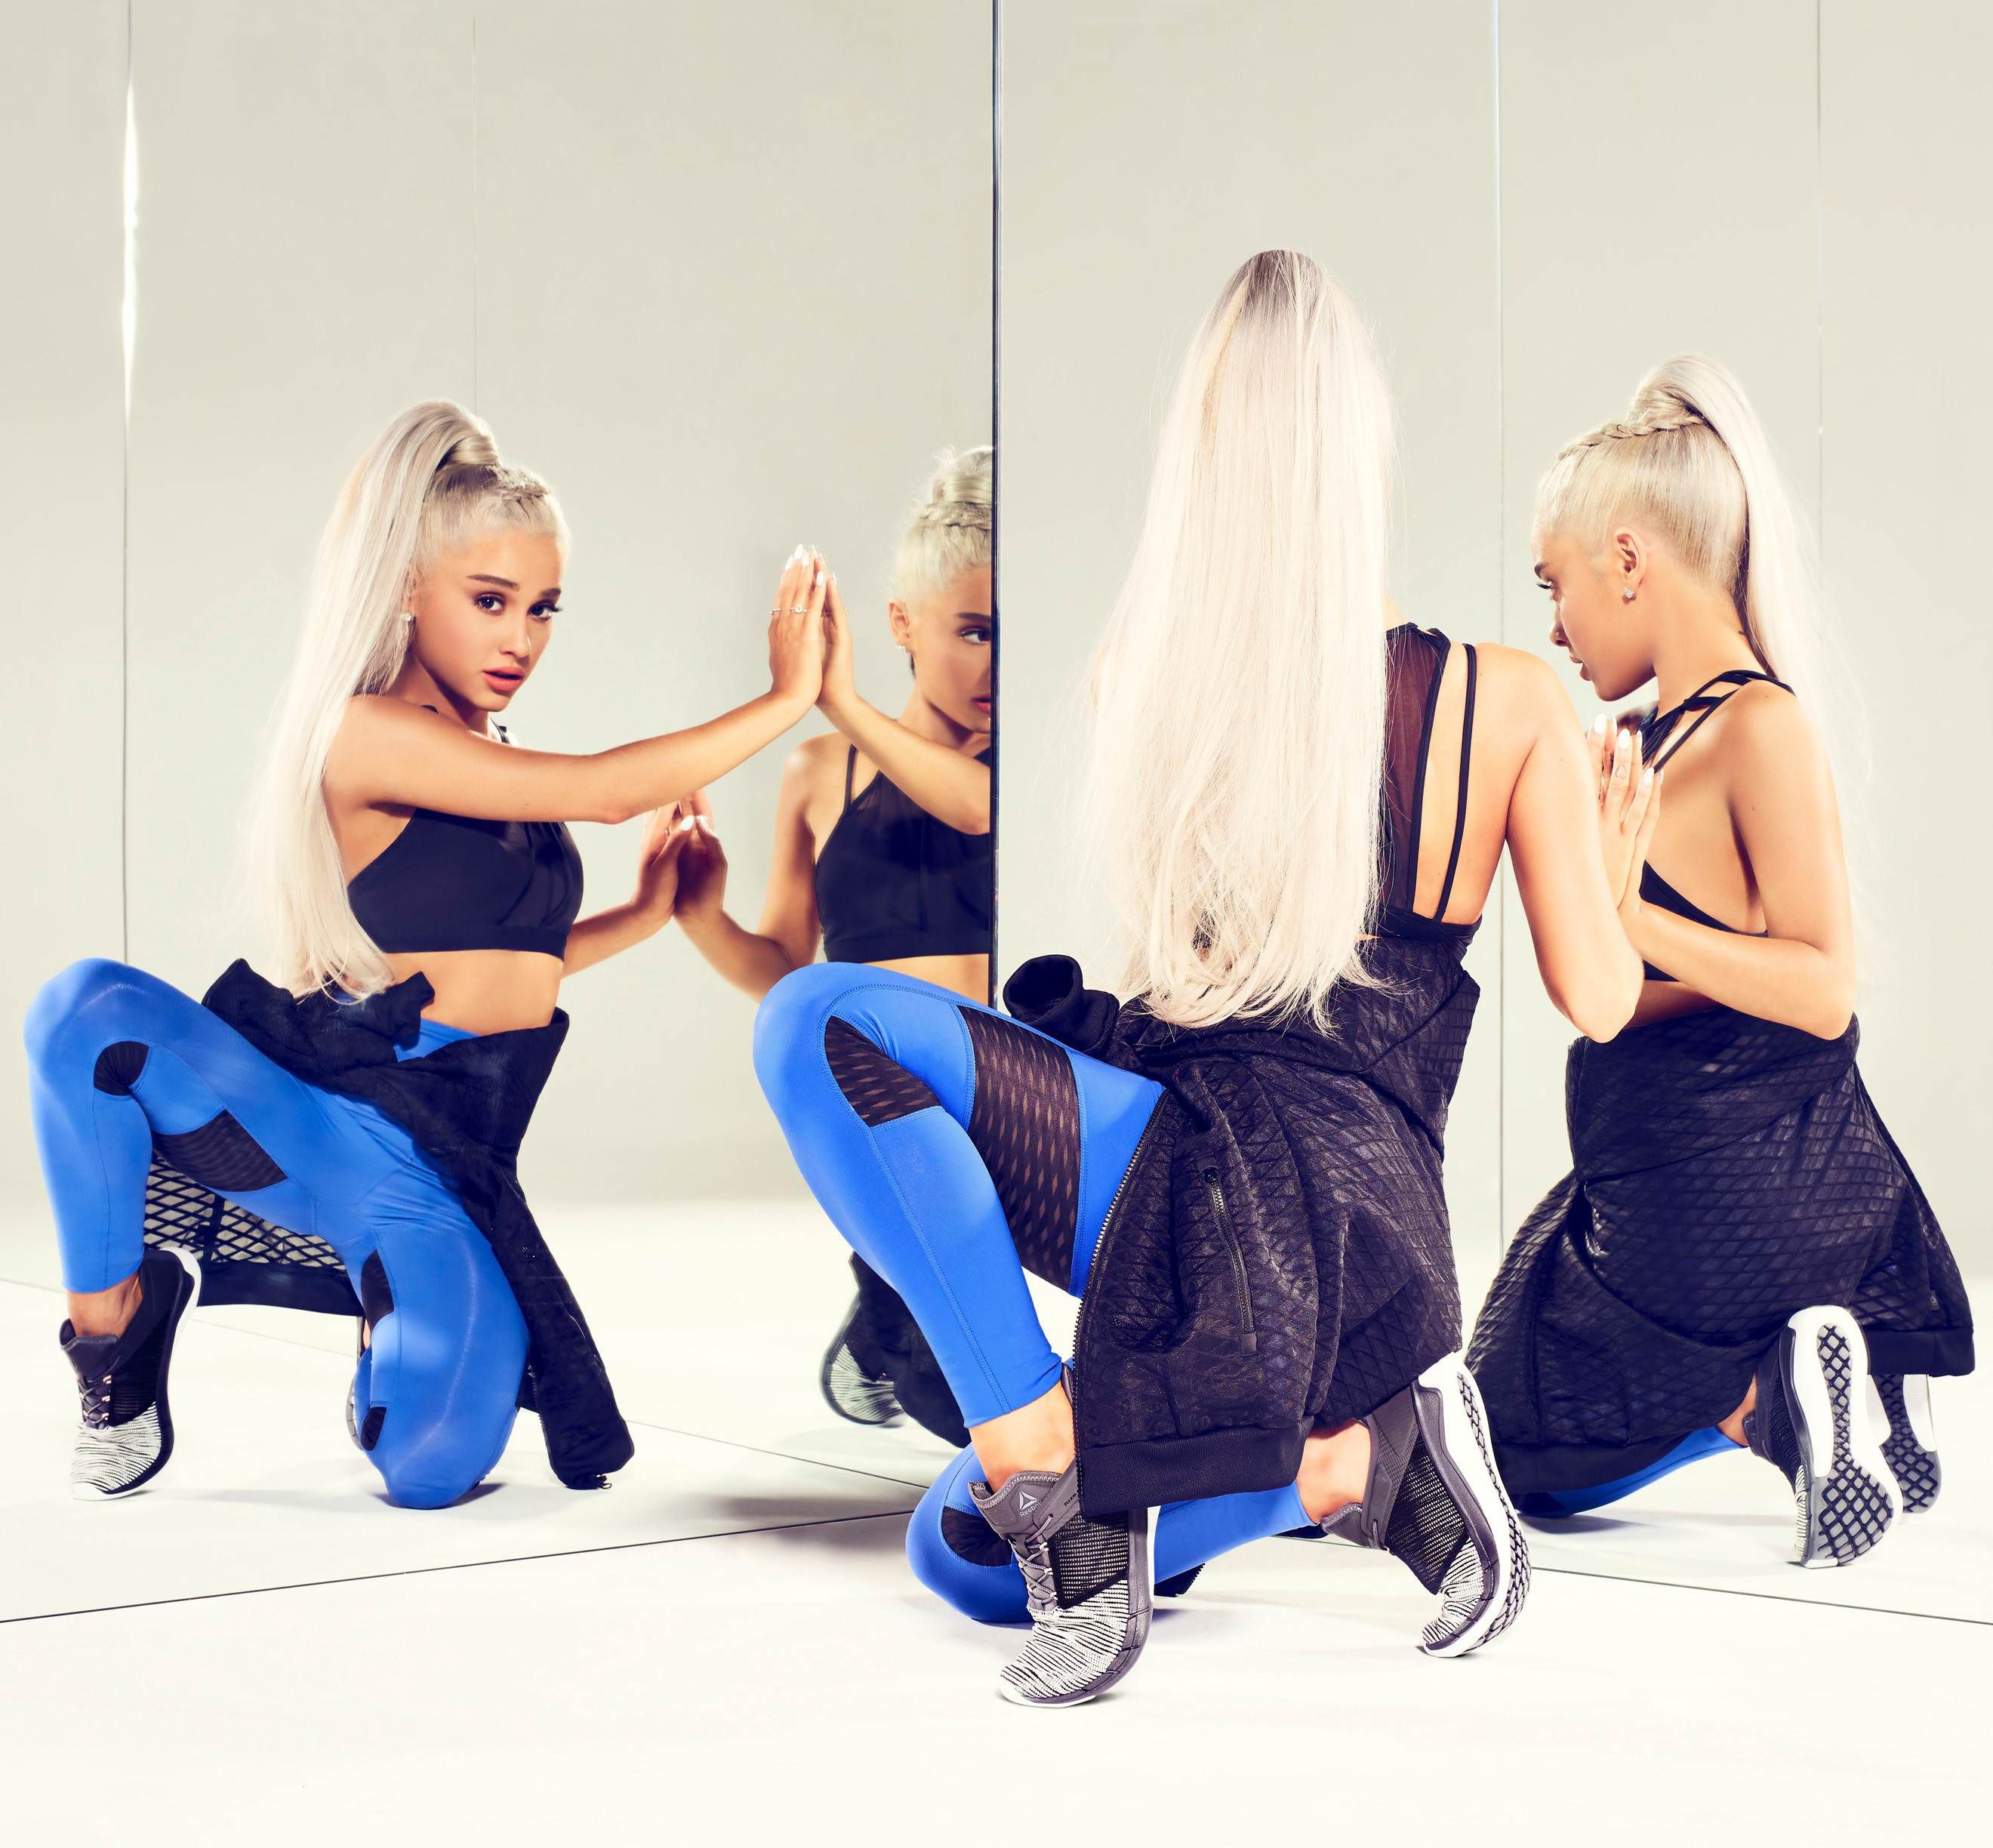 Ariana Grande Reebok 2018 Photoshoot Wallpapers